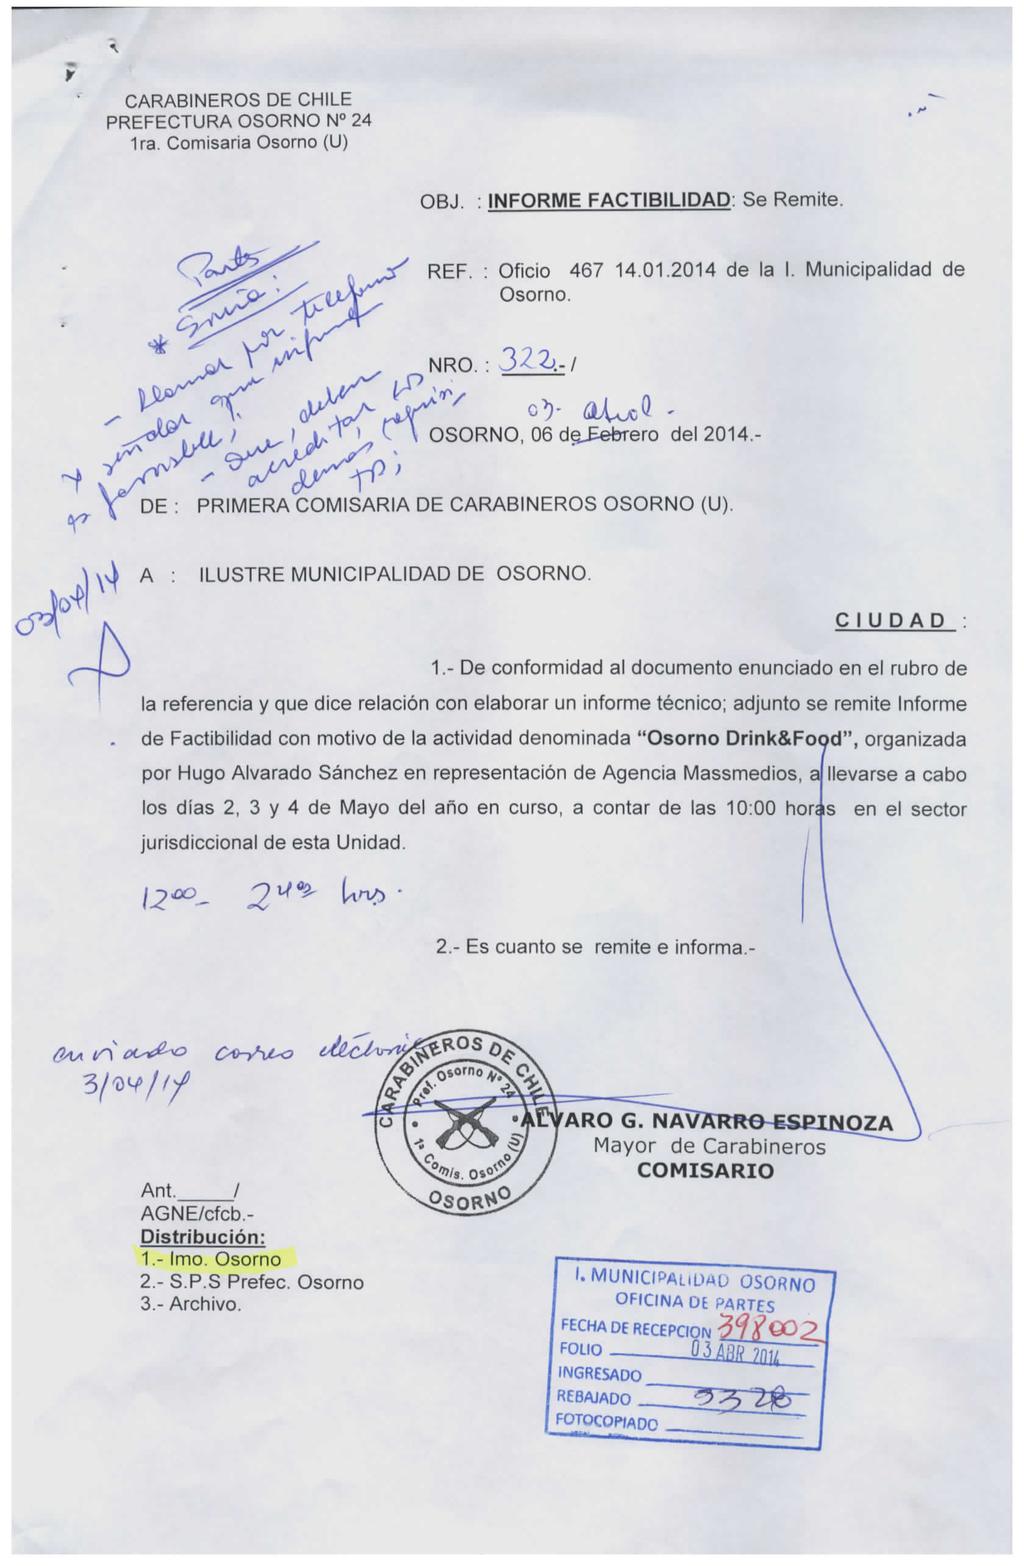 CARABINEROS DE CHILE PREFECTURA OSORNO N 24 1ra. Comisaria Osorno (U) OBJ. : INFORME FACTIBILIDAD: Se Remite. REF. : Oficio 467 14.01.2014 de la I. Municipalidad de Osorno. NRO.